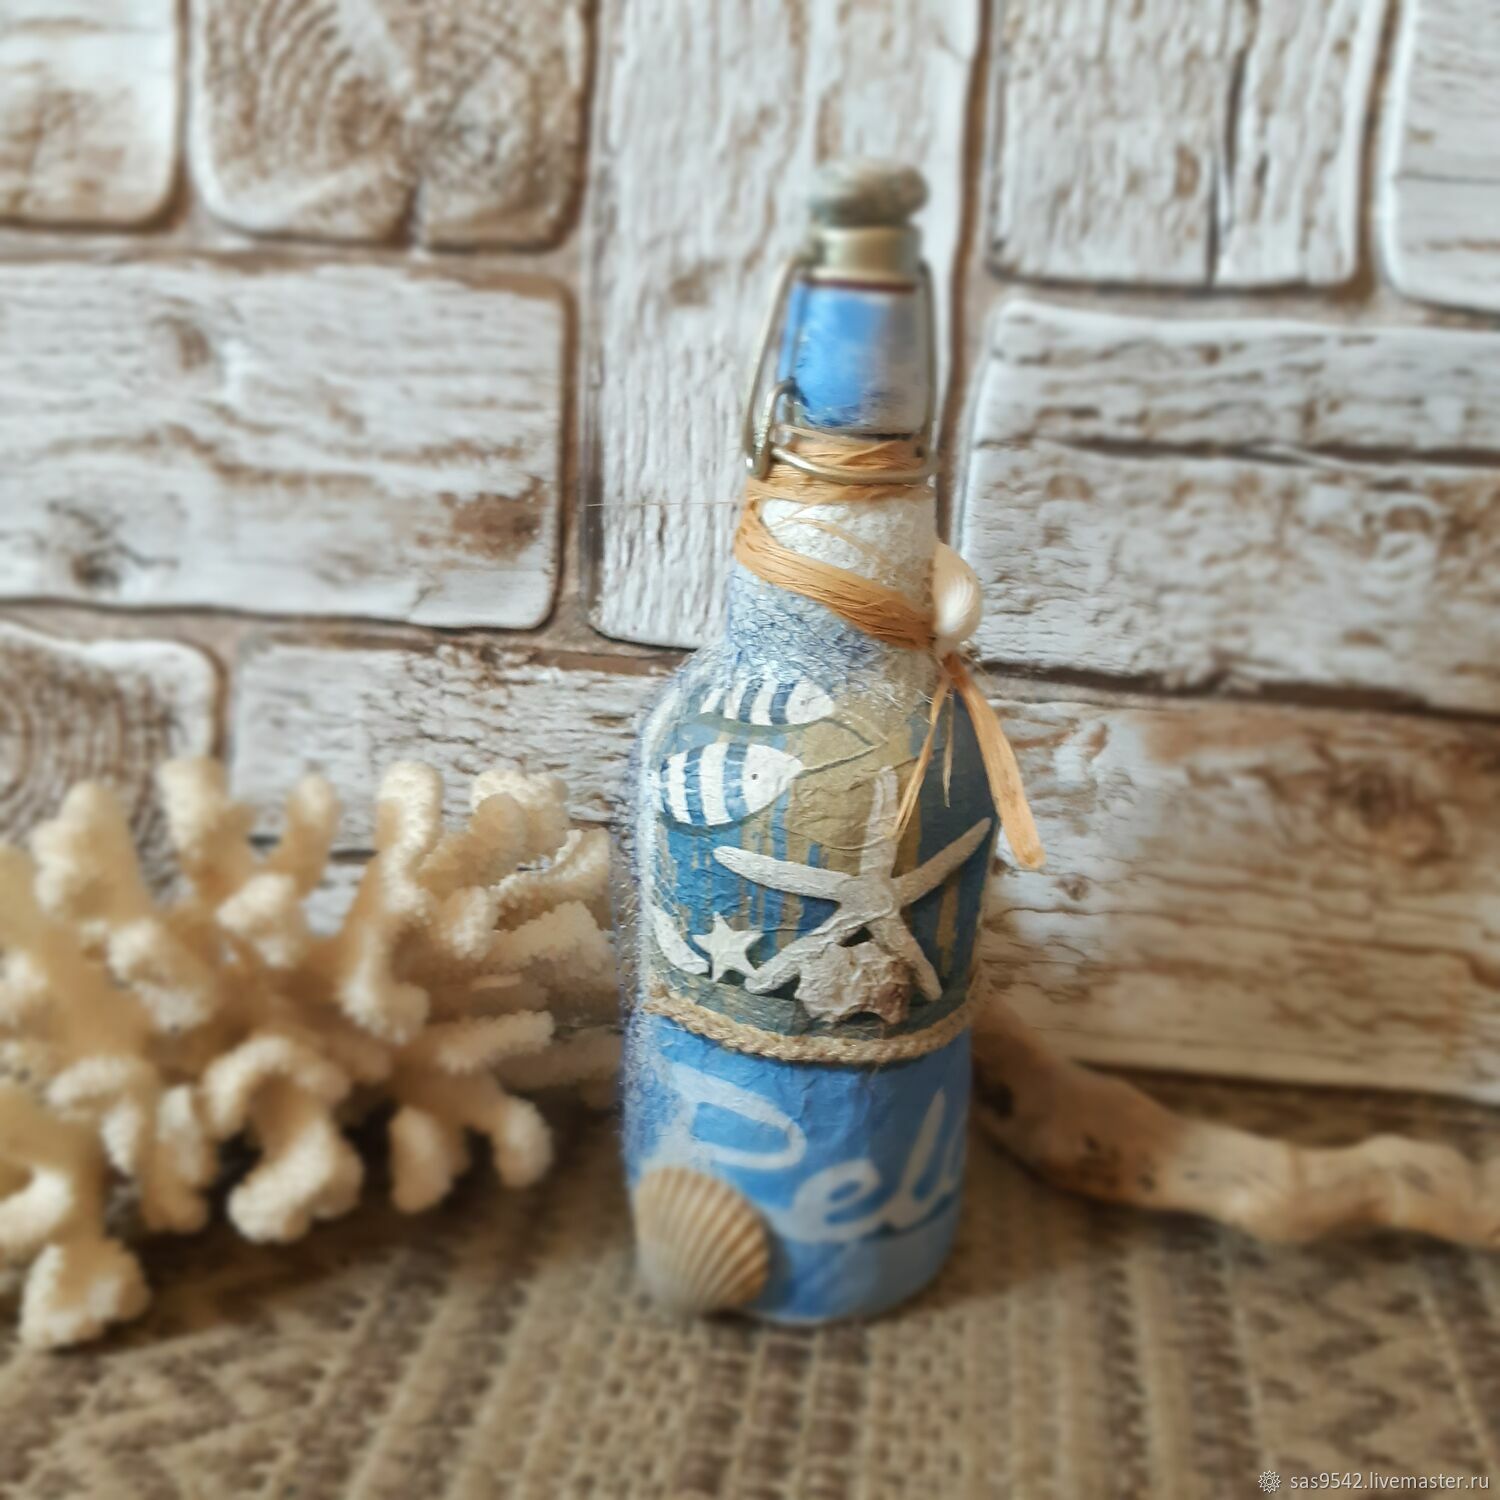 Купить бутылки саратов. Морской декор бутылок. Бутылка с морским воздухом. Декор бутылок ракушками и камушками. Бутылка моряк.